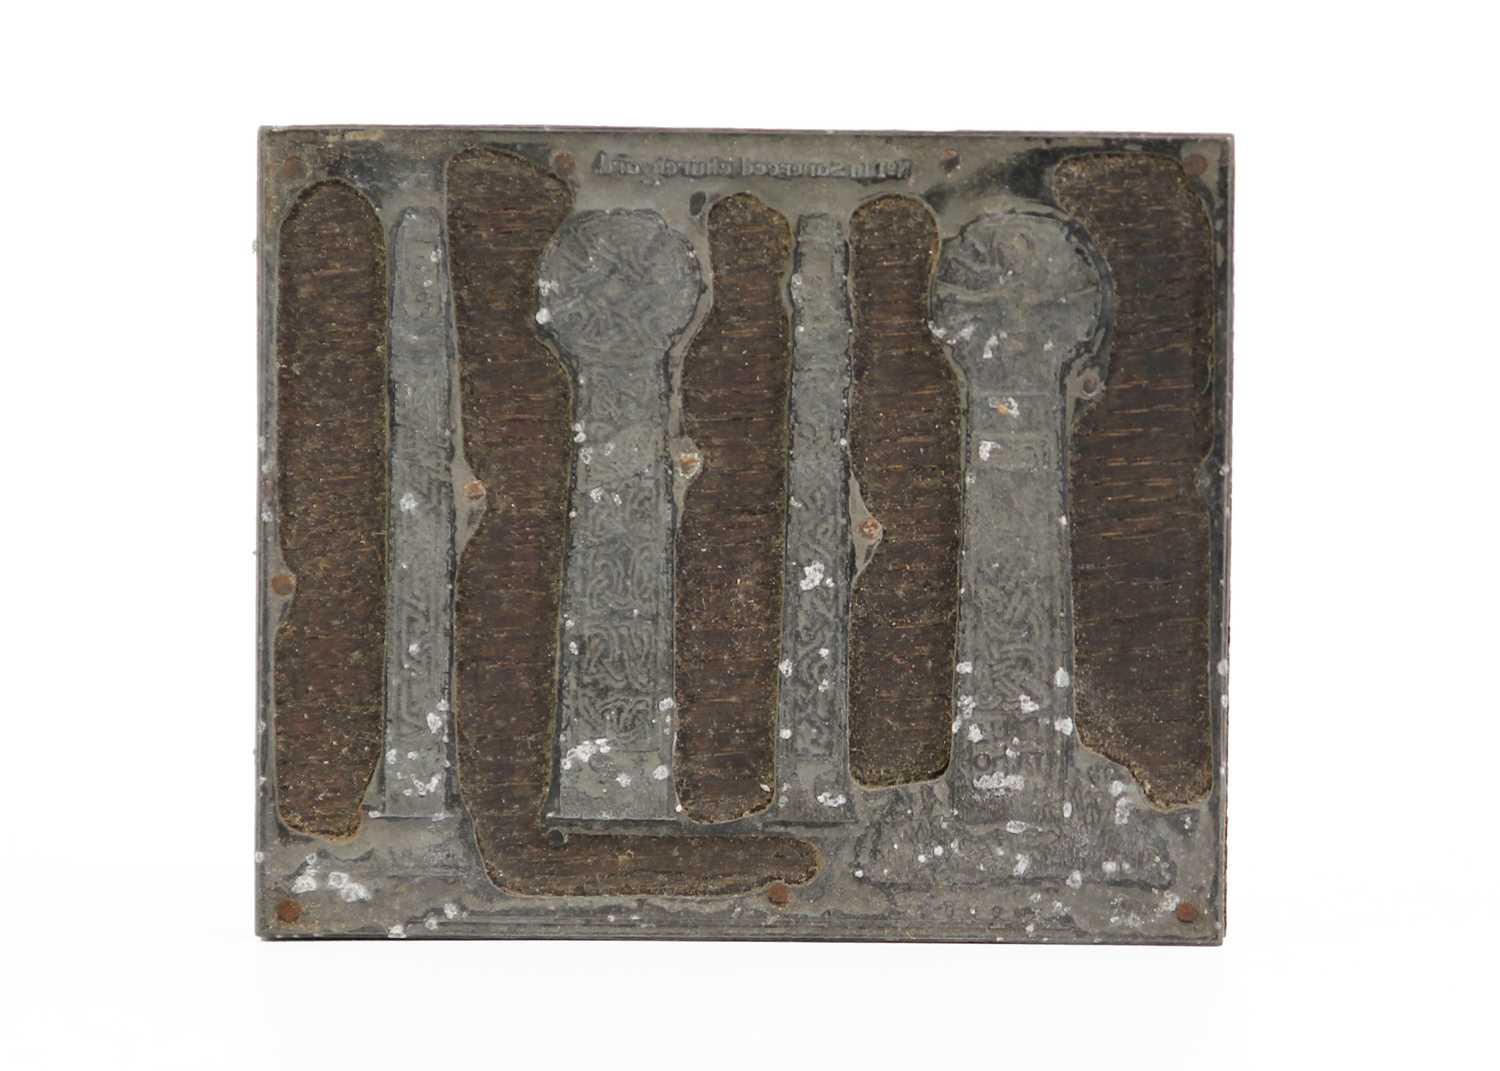 'Old Cornish Crosses' Printers blocks used in the seminal work by Arthur G. Langdon. - Image 7 of 9